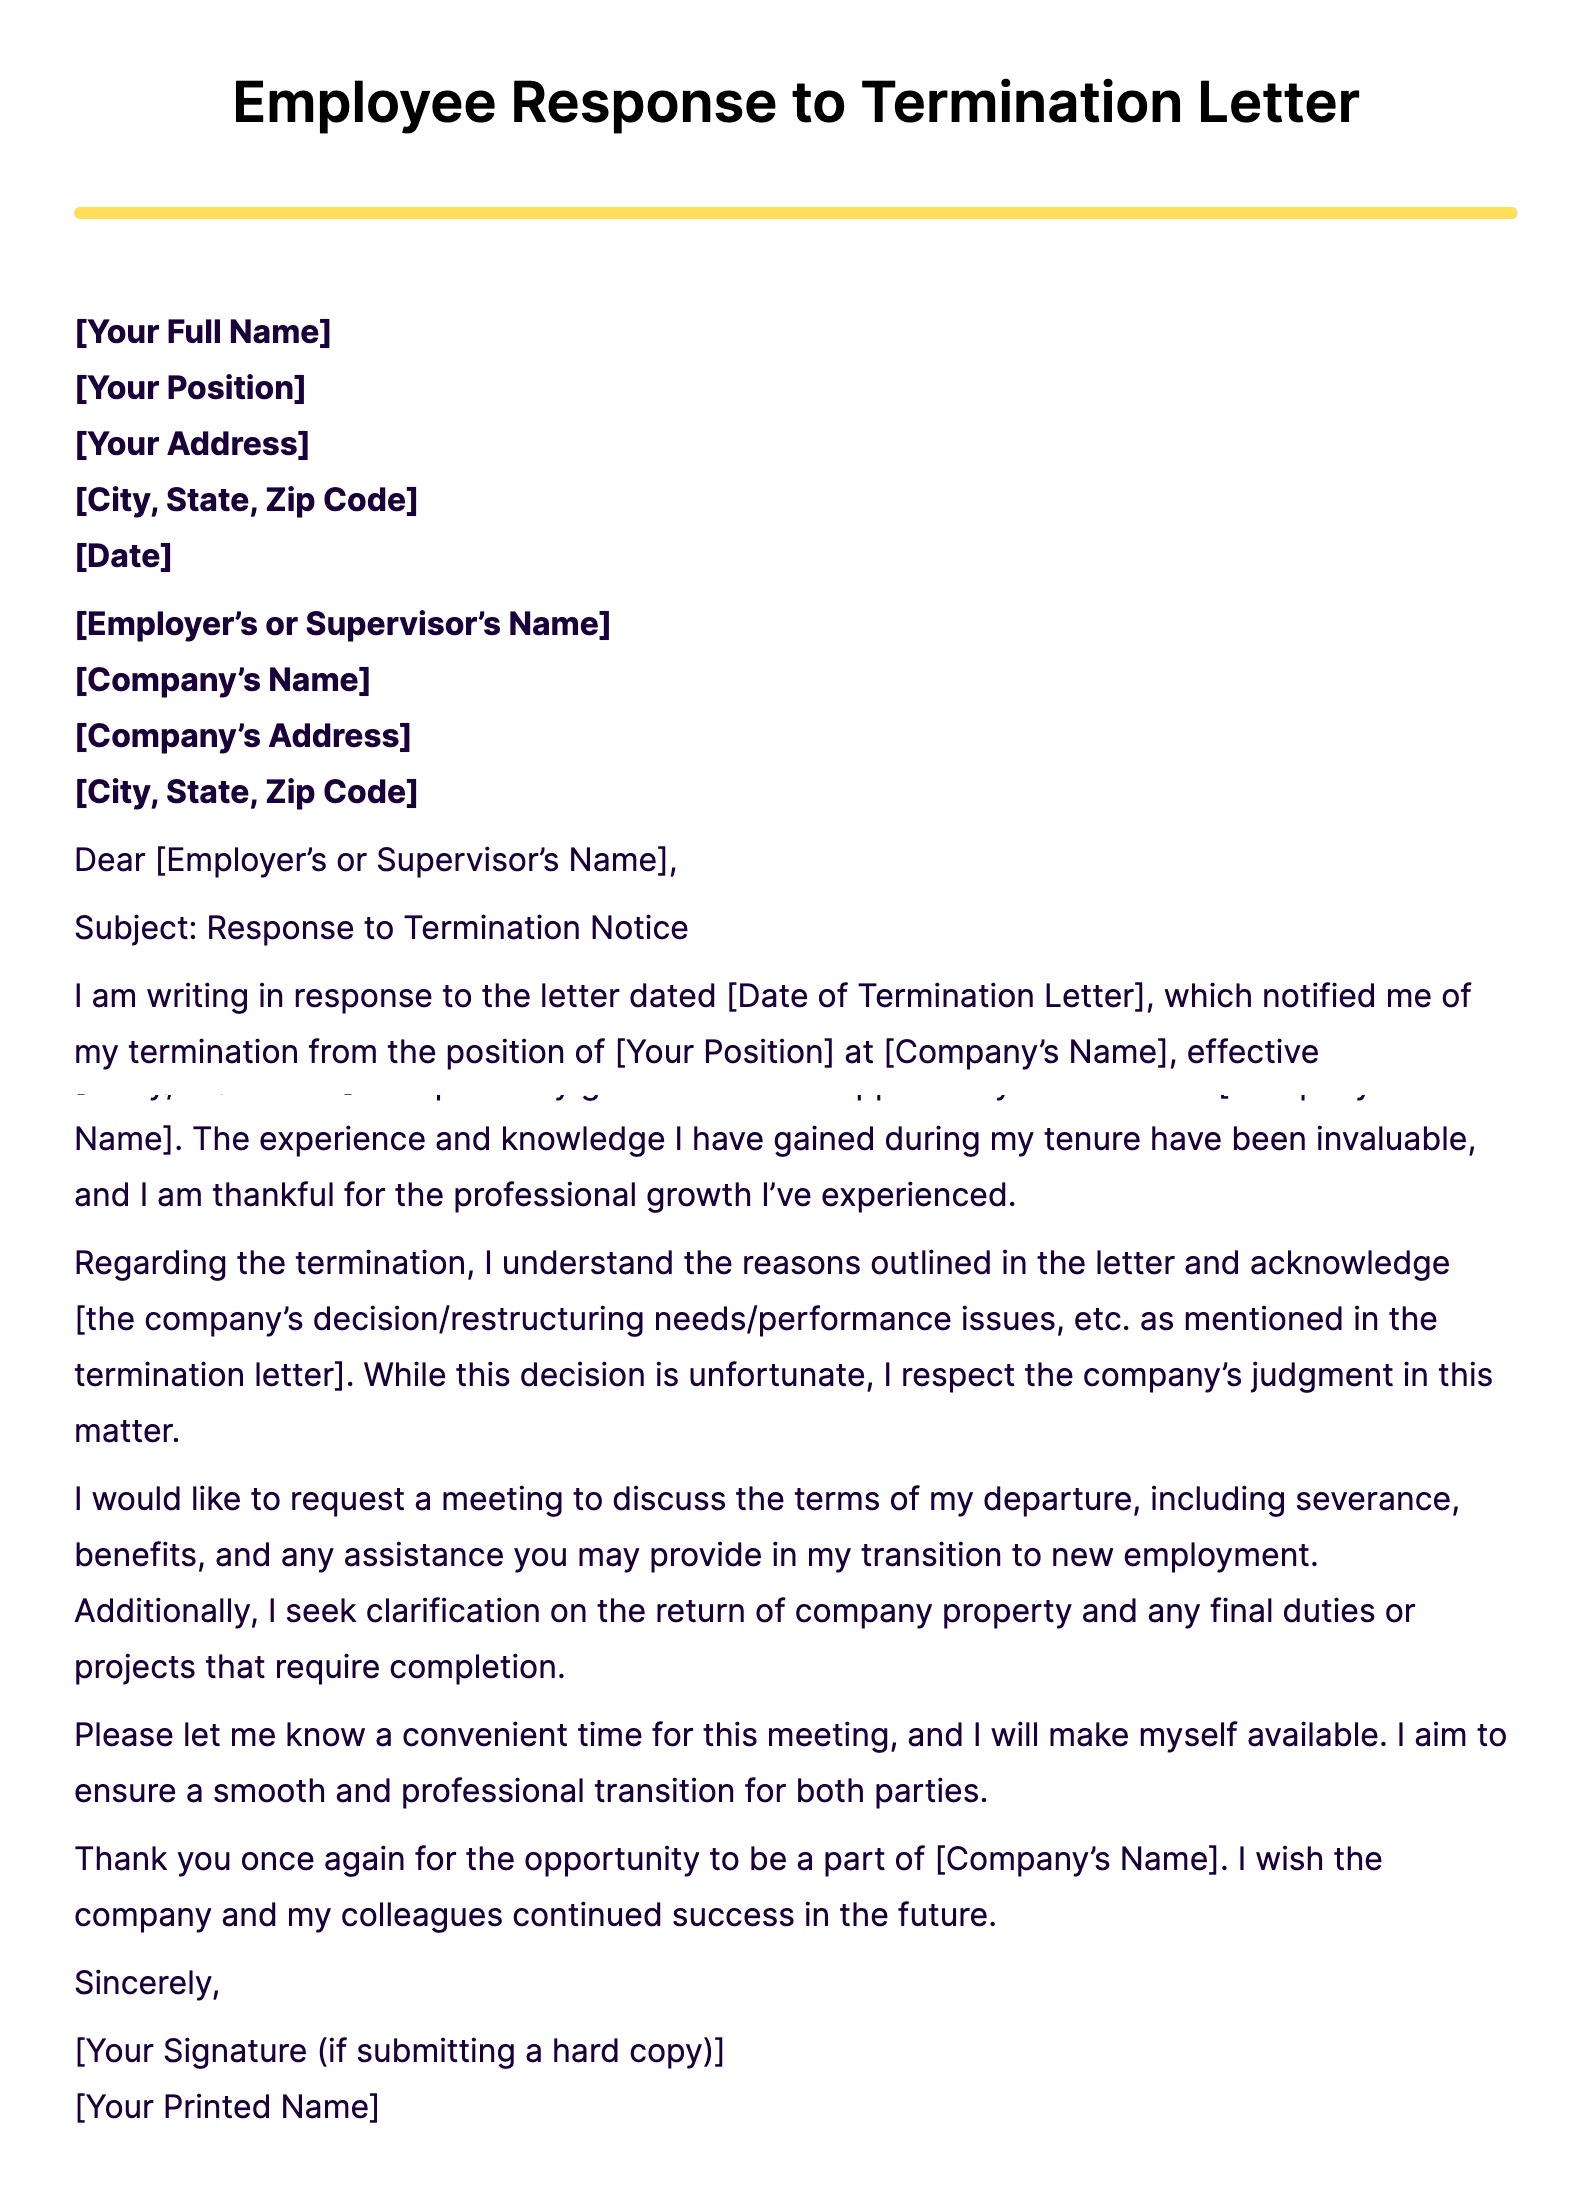 Employee Response to Termination Letter